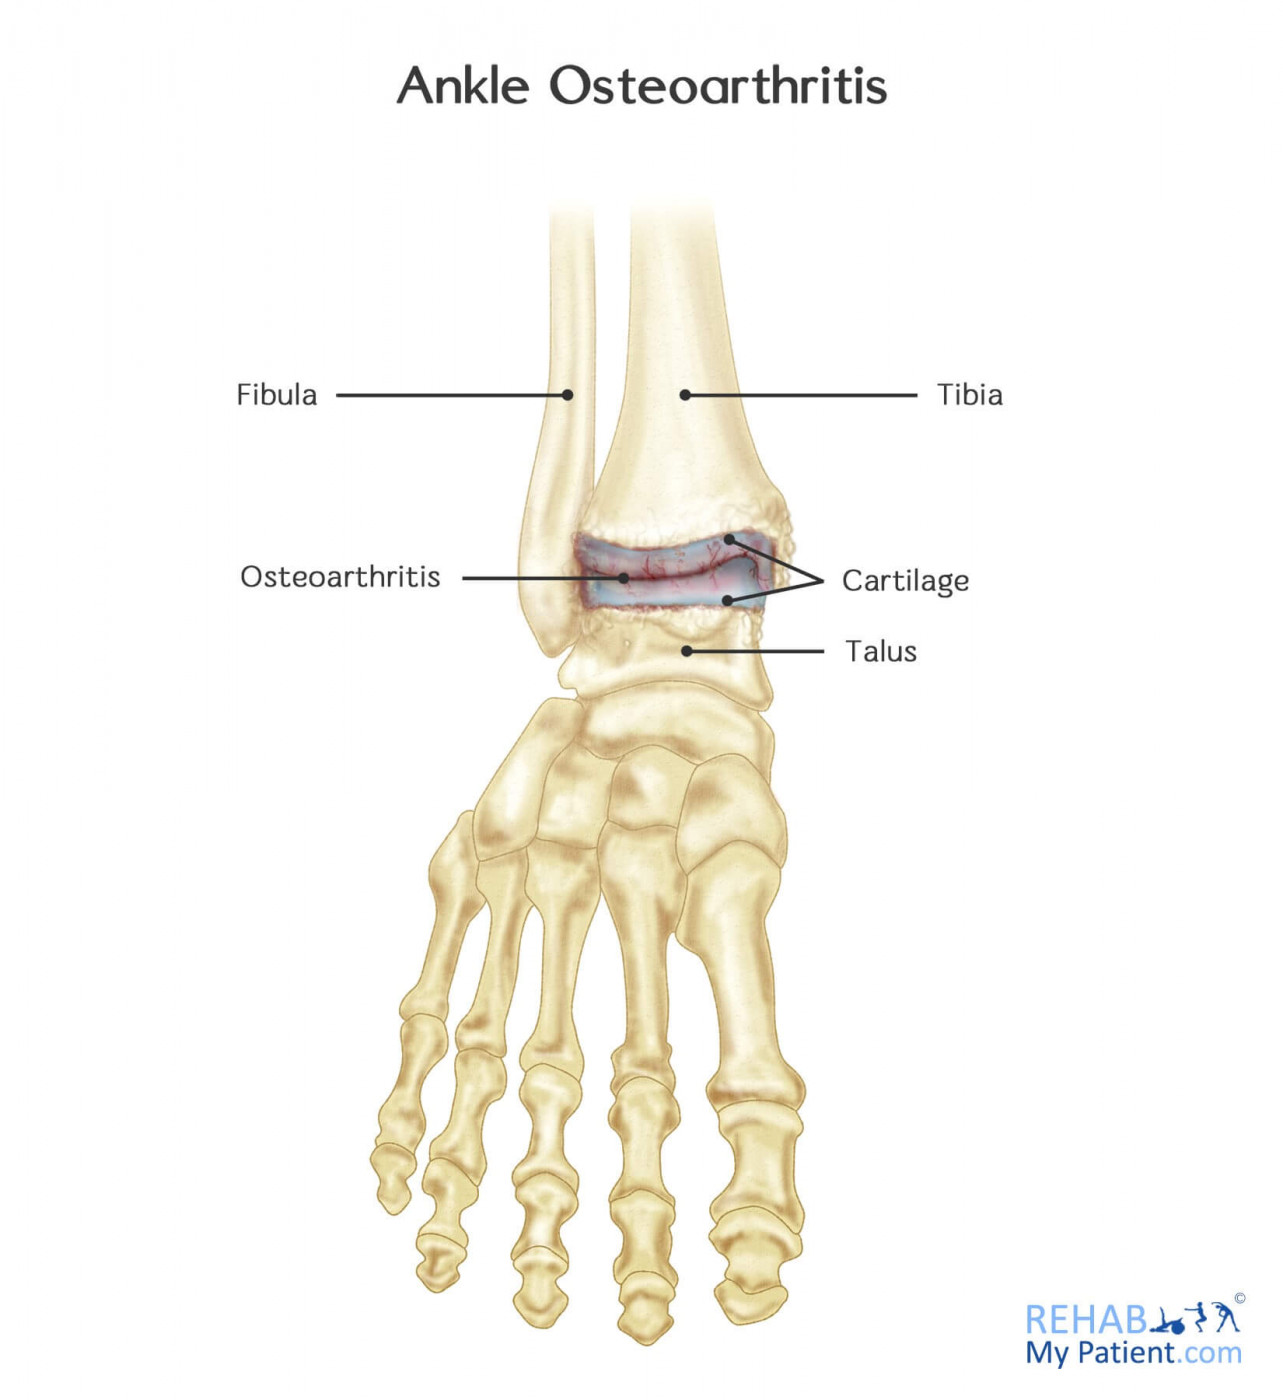 Ankle Osteoarthritis